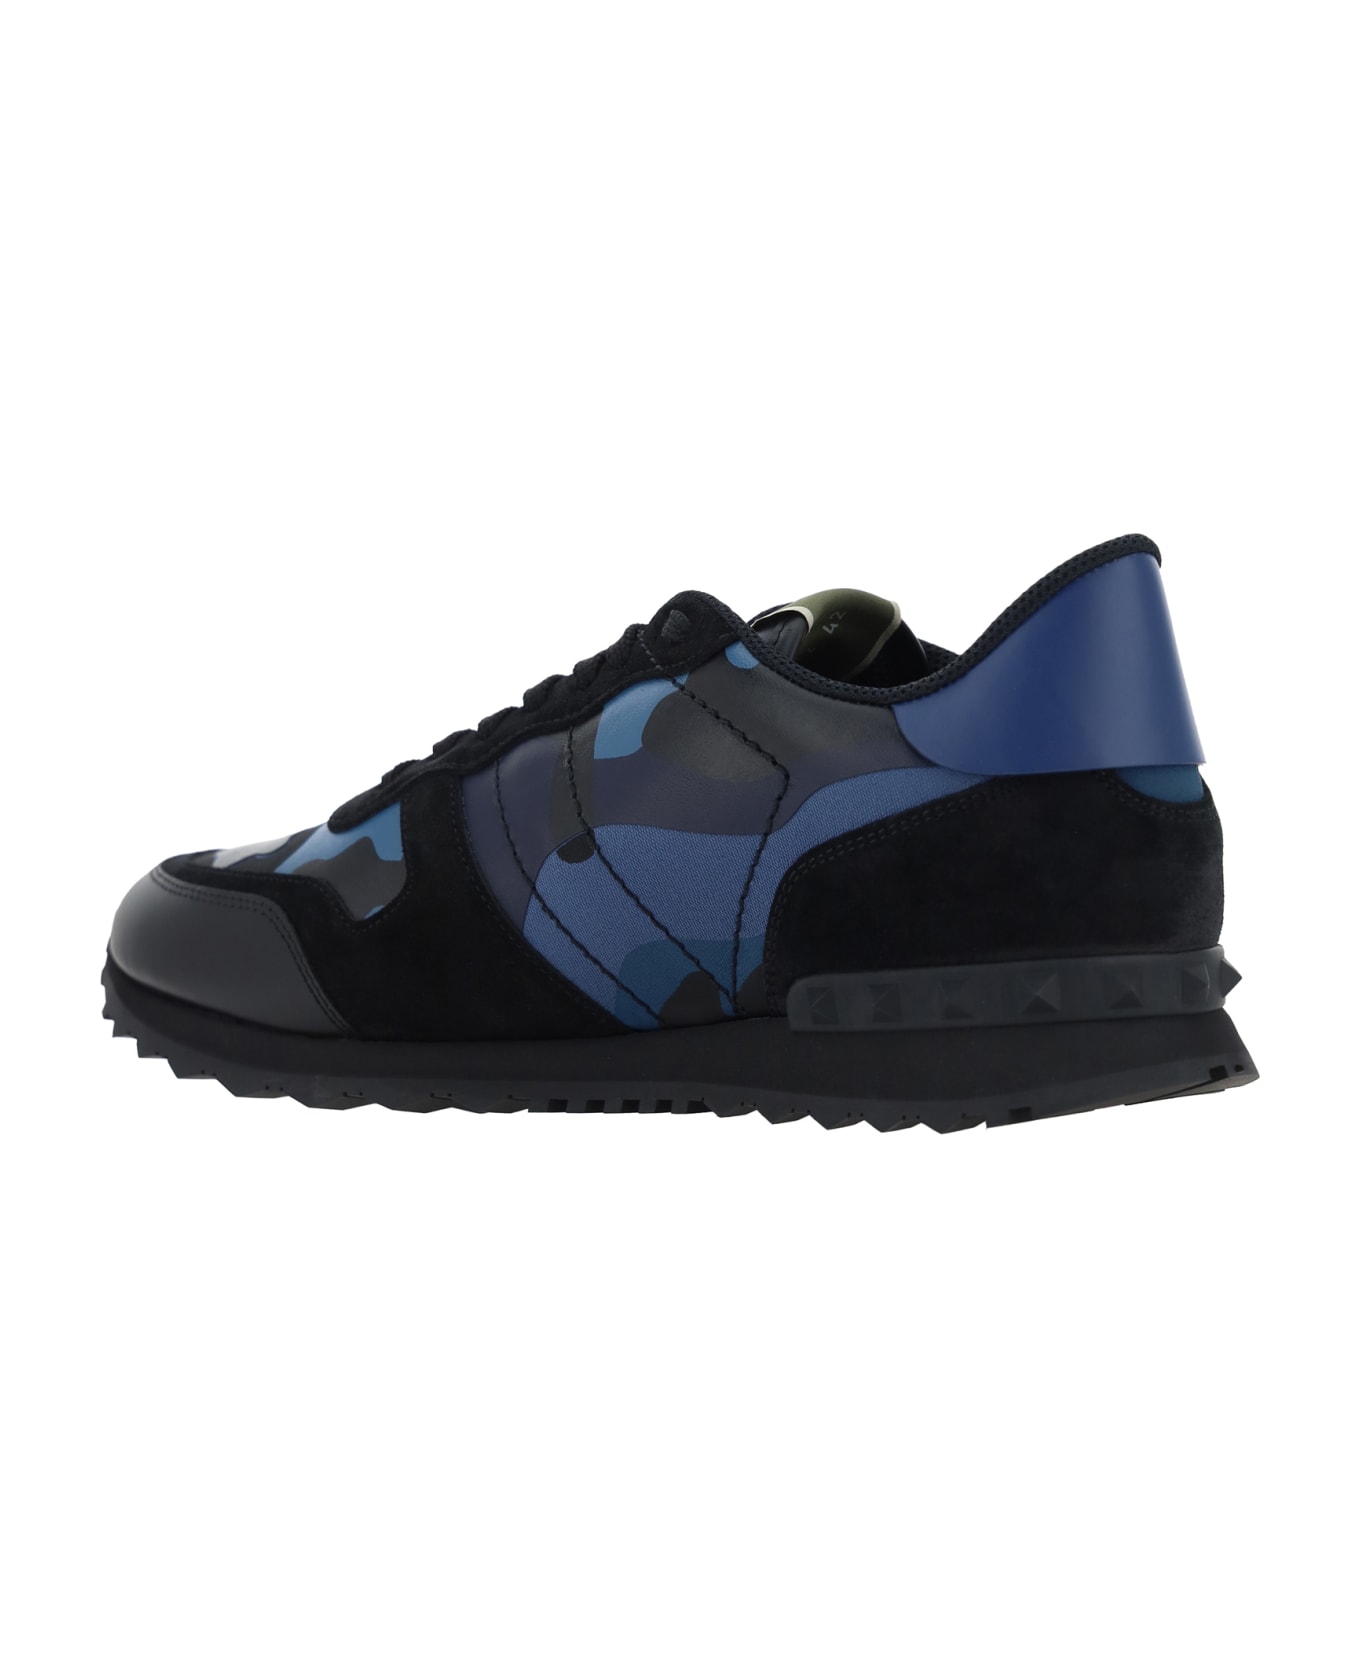 Valentino Garavani Rockrunner Sneakers - Bluette-marine/nero/nero-new Baltiq